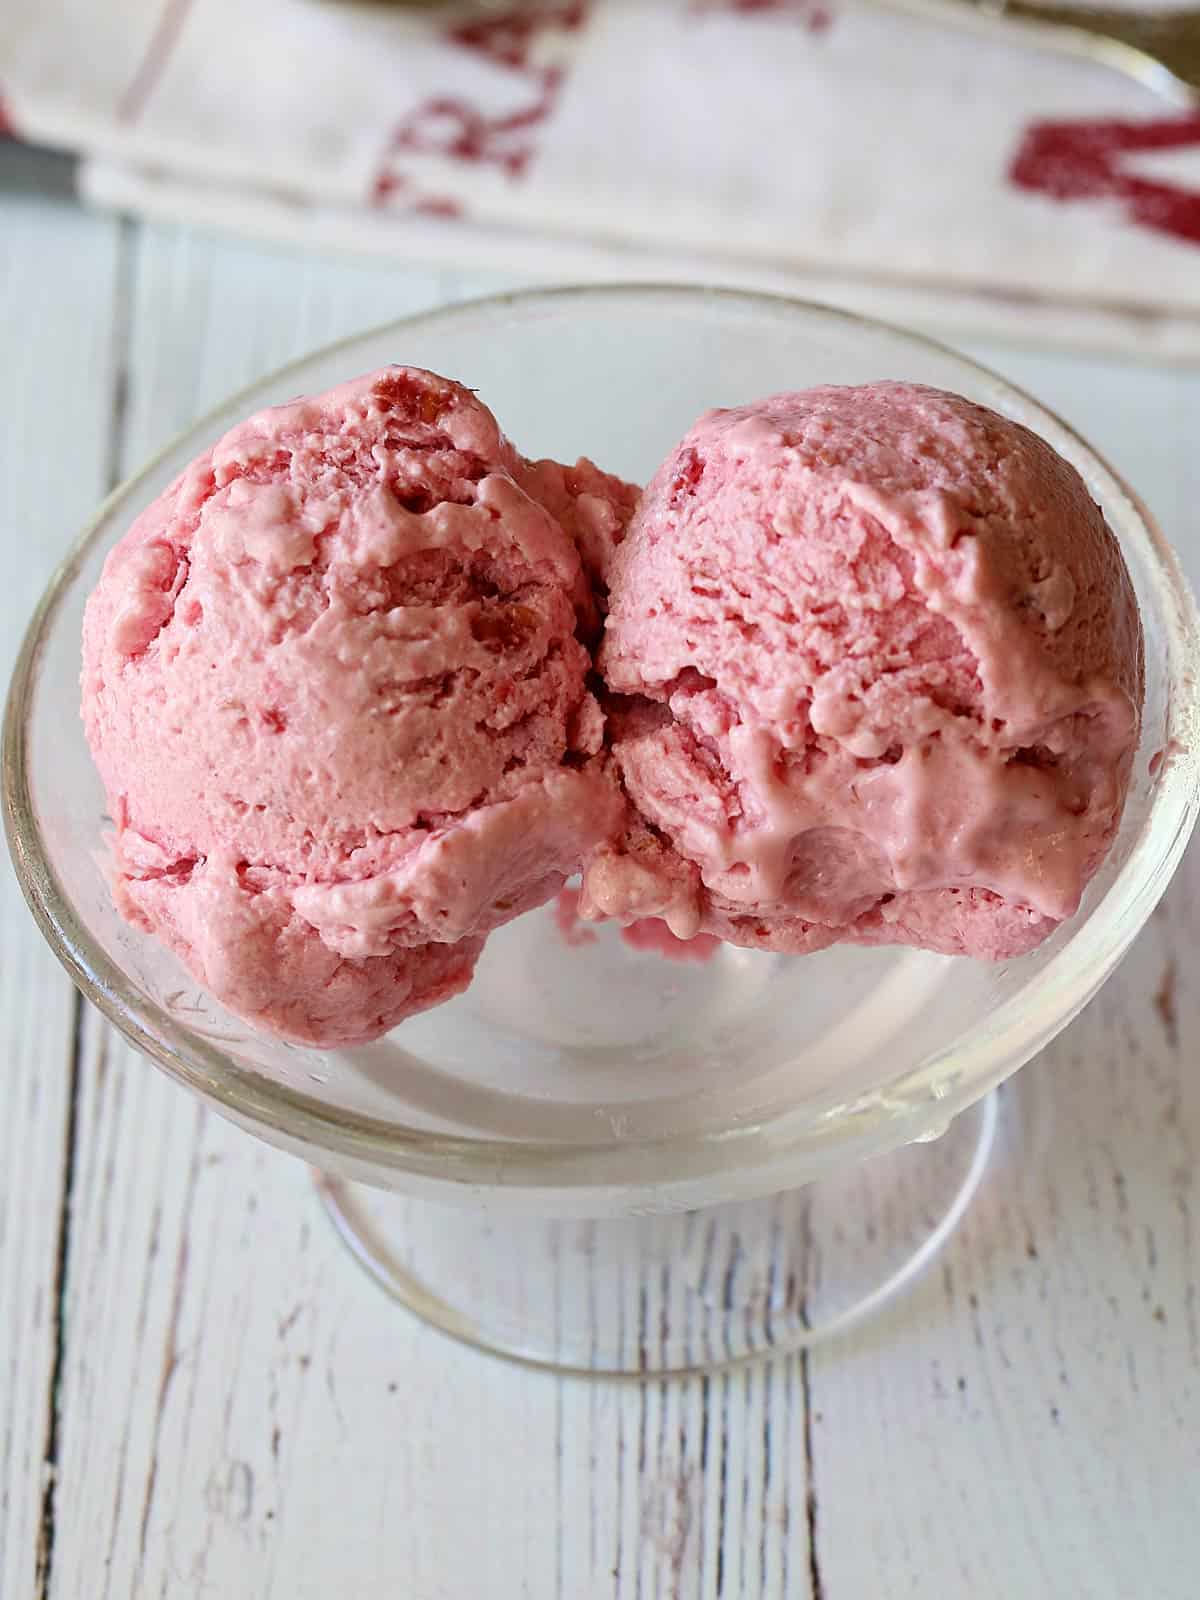 Two scoops of raspberry frozen yogurt served in a glass dessert bowl. 